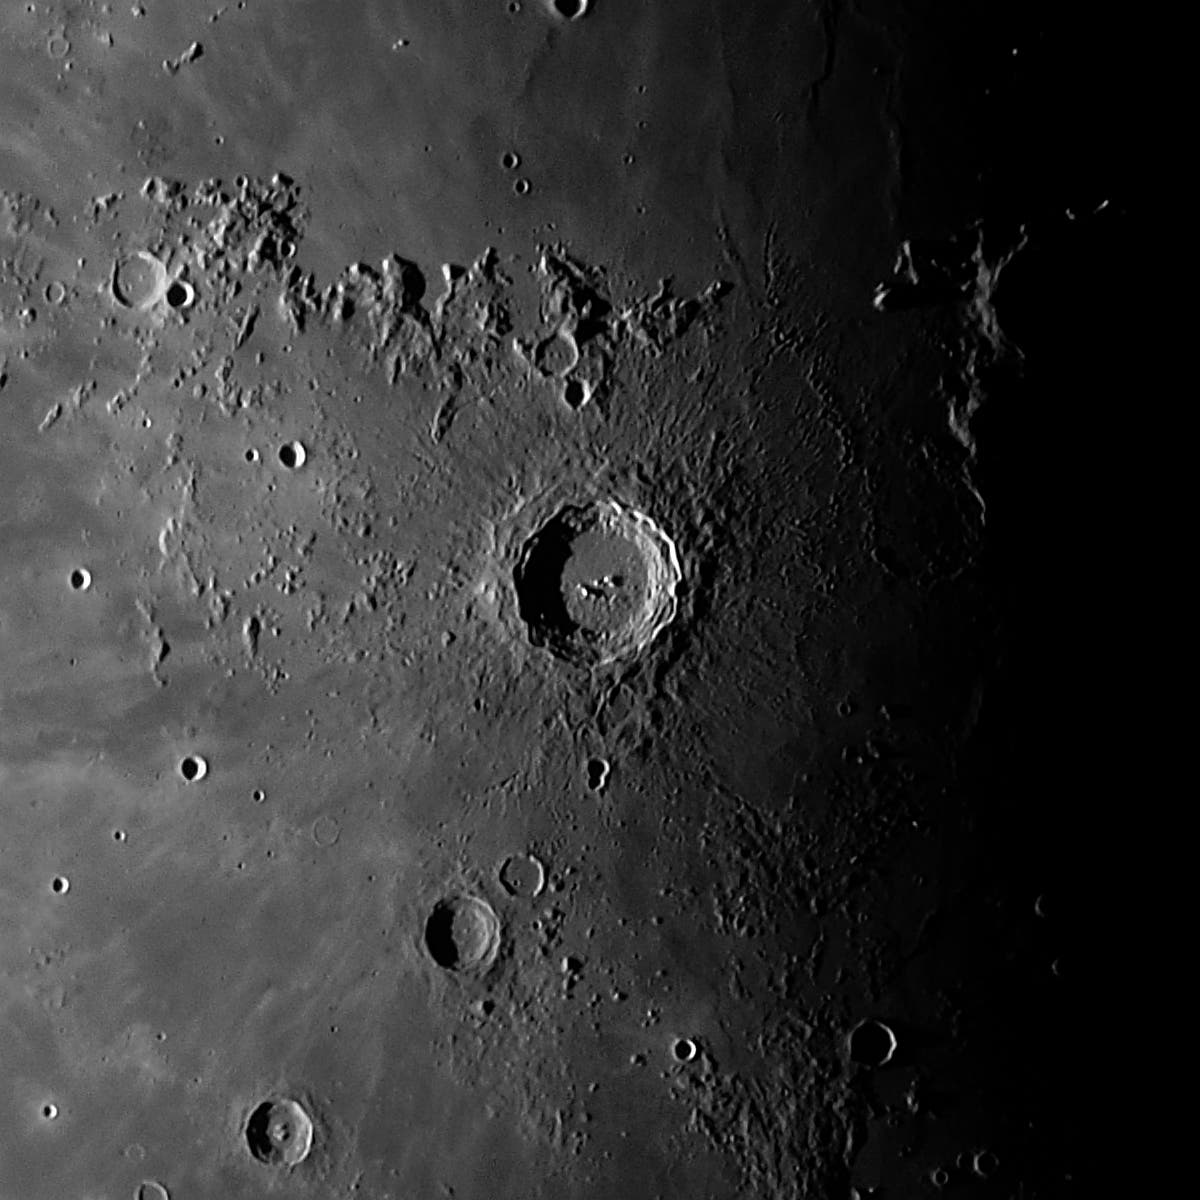 Kopernikus bei abnehmendem Mond